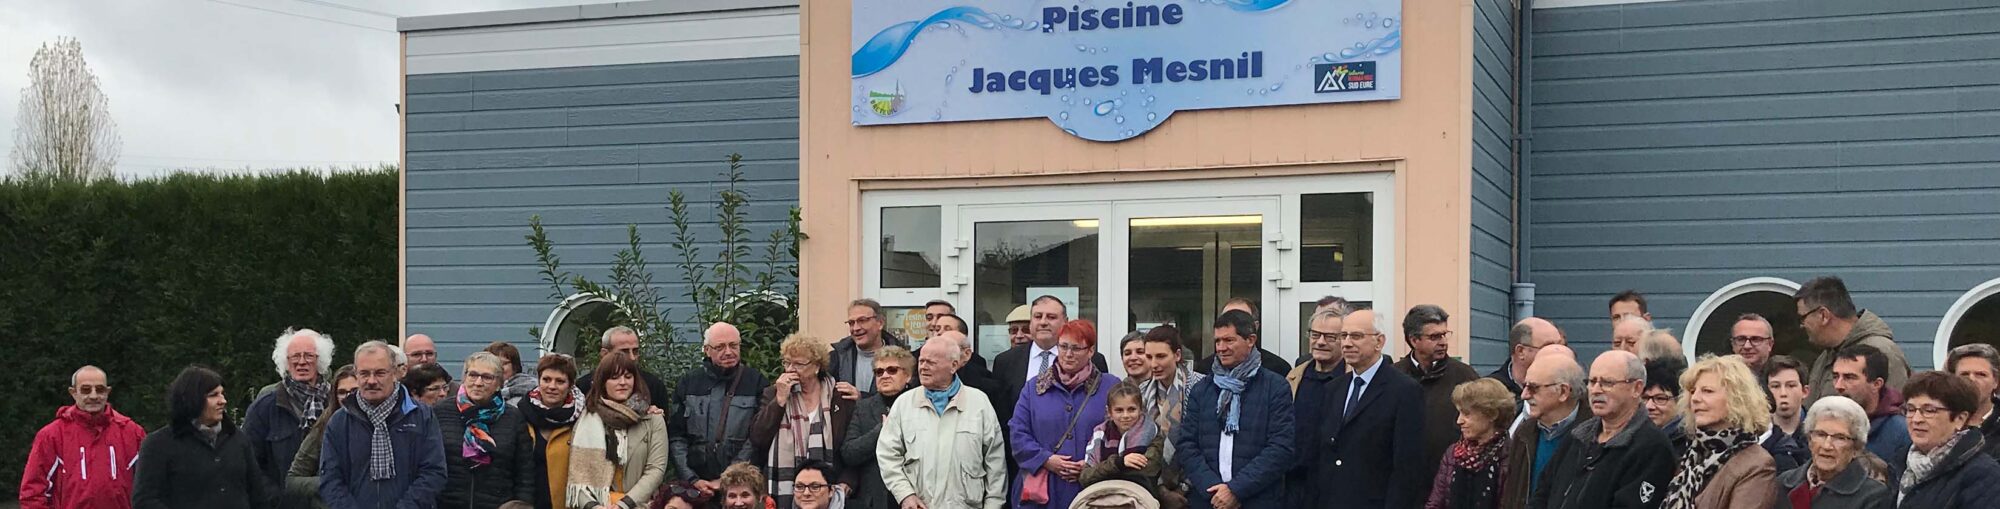 2017.11.04-Piscine Jacques MesnilIMG_2291-Bandeau